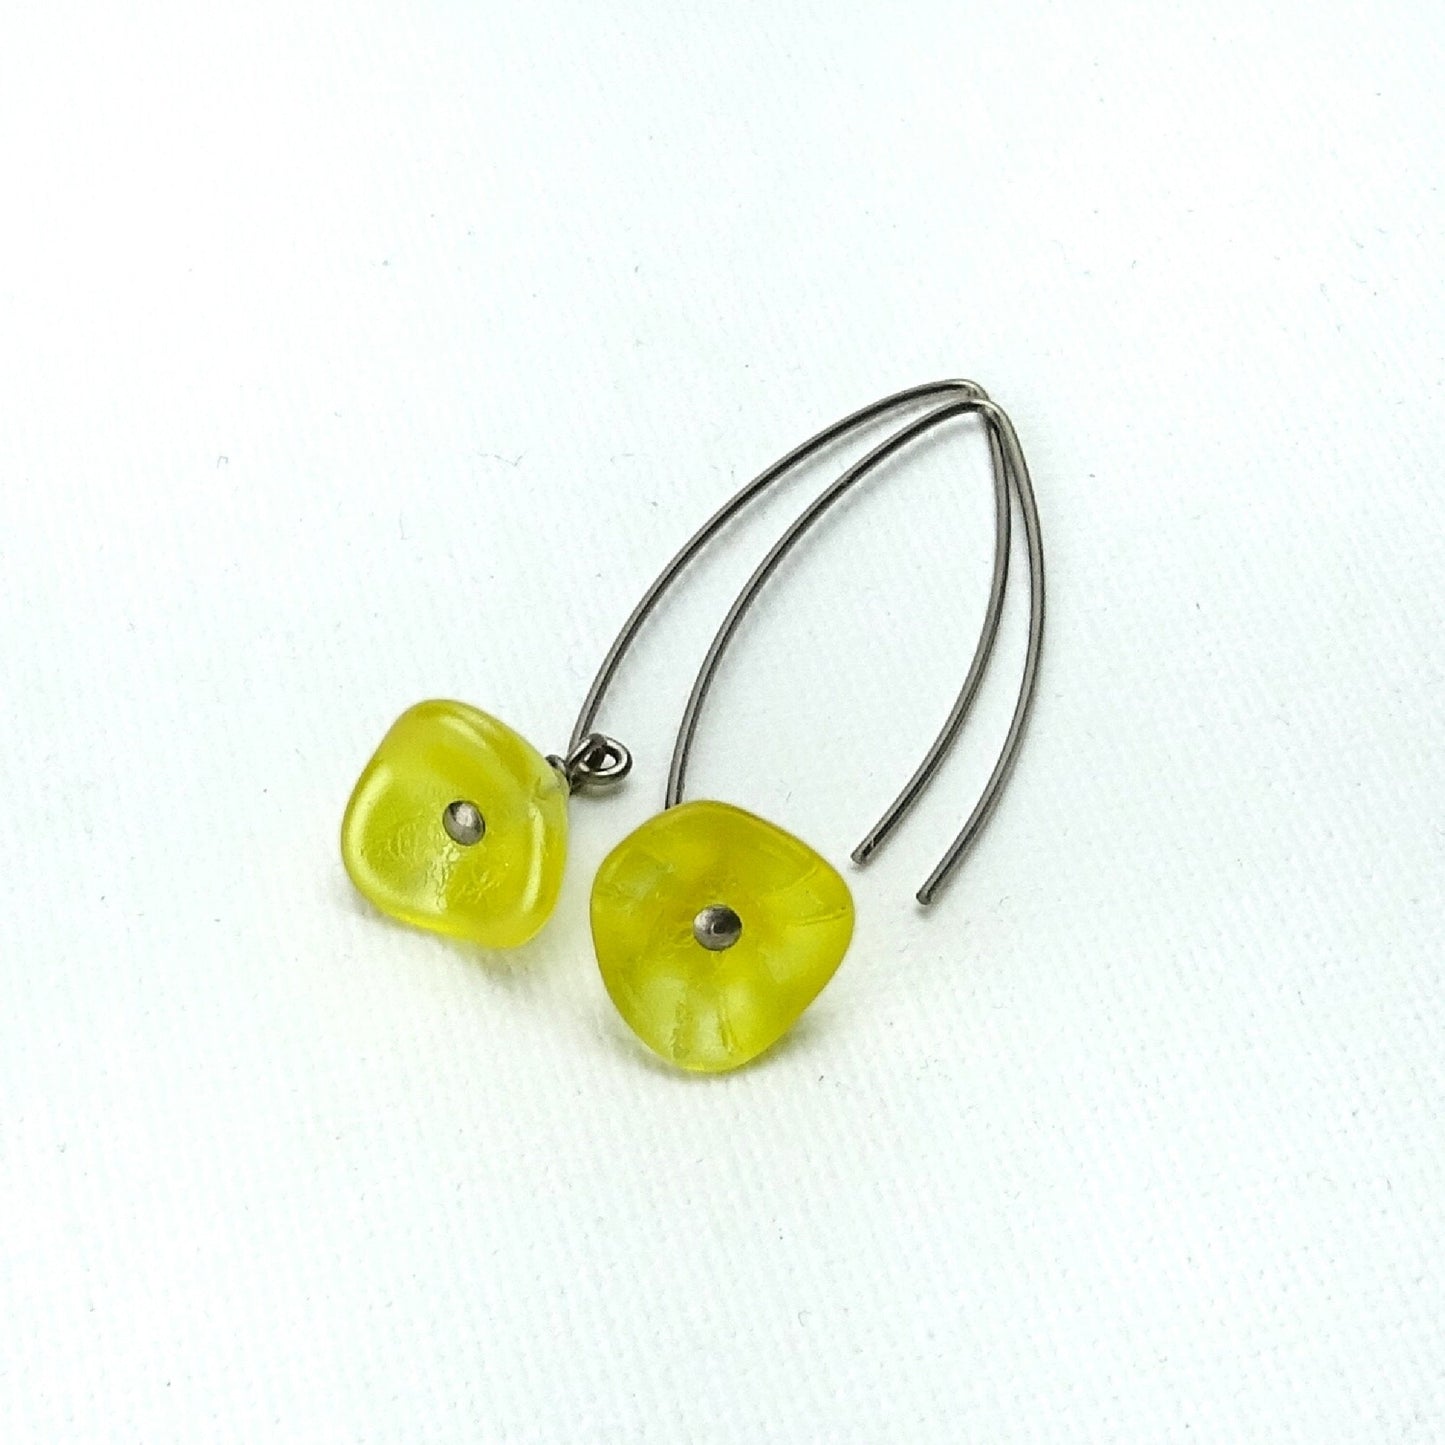 Buttercup Yellow Czech Glass Flowers Niobium Earrings, Arch Shaped Earwires, Hypoallergenic Nickel Free Titanium Earrings for Sensitive Ears